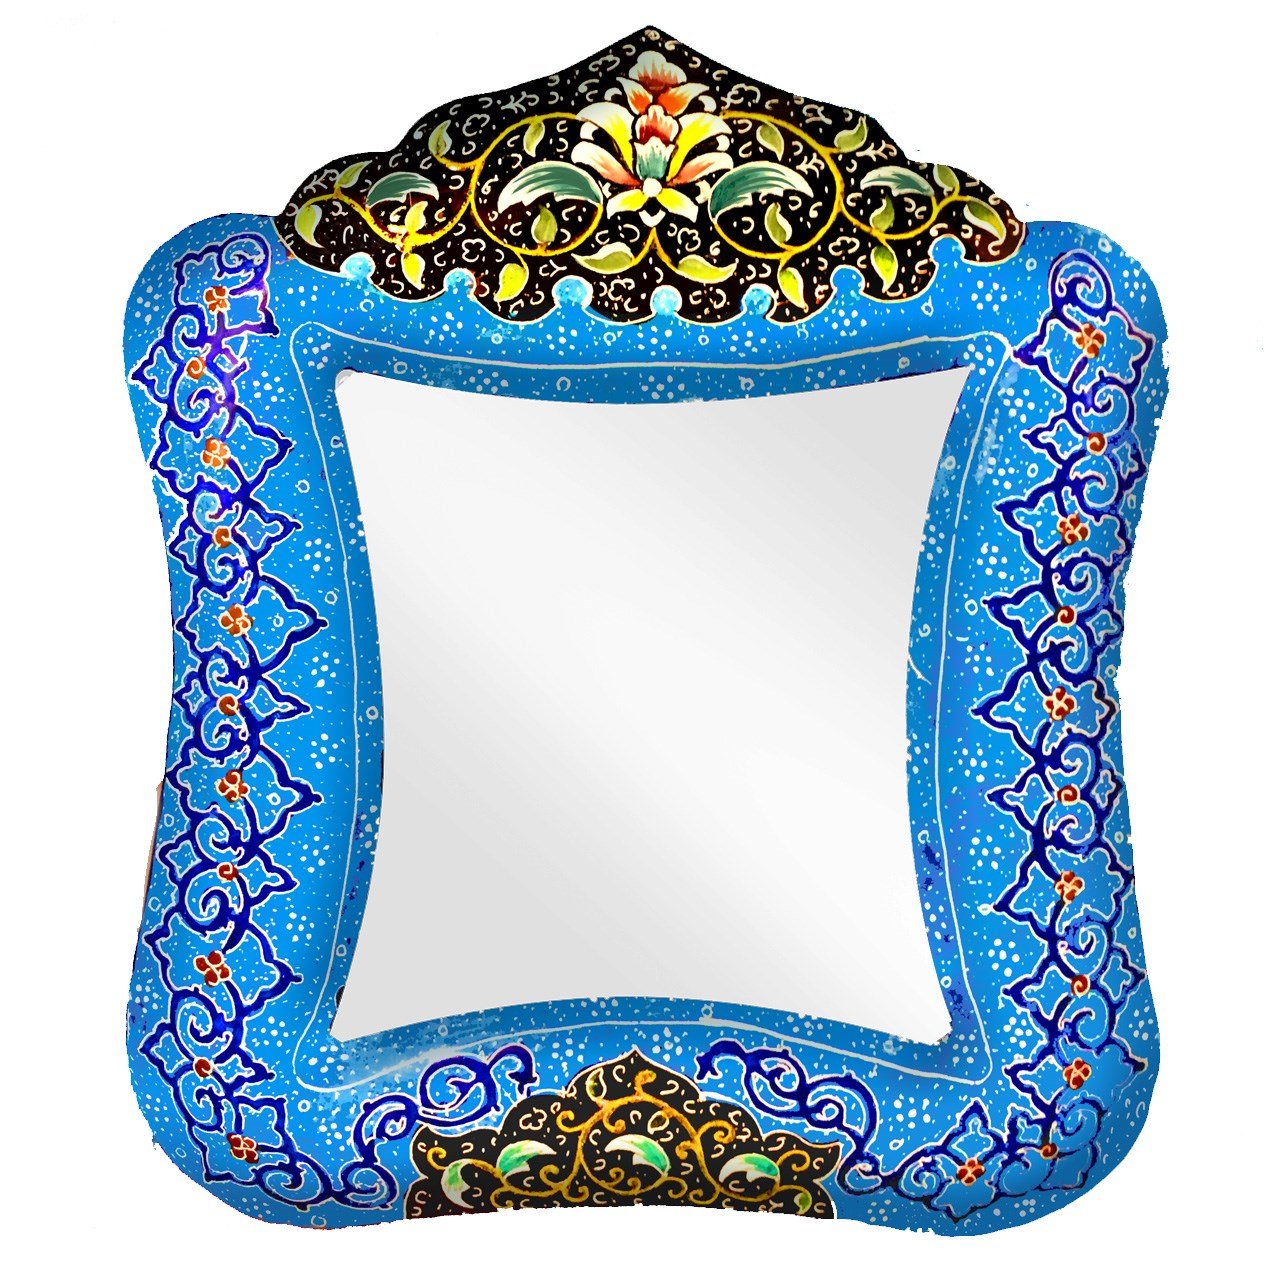 Enamel Handicraft Copper Frame of Mirror Diba 7 Design, नीले तामचीनी, हस्तशिल्प, हस्तशिल्प व्यंजन, पकवान हस्तकला,blue enamel,handicrafts,handicrafts dishes,dish handicraft